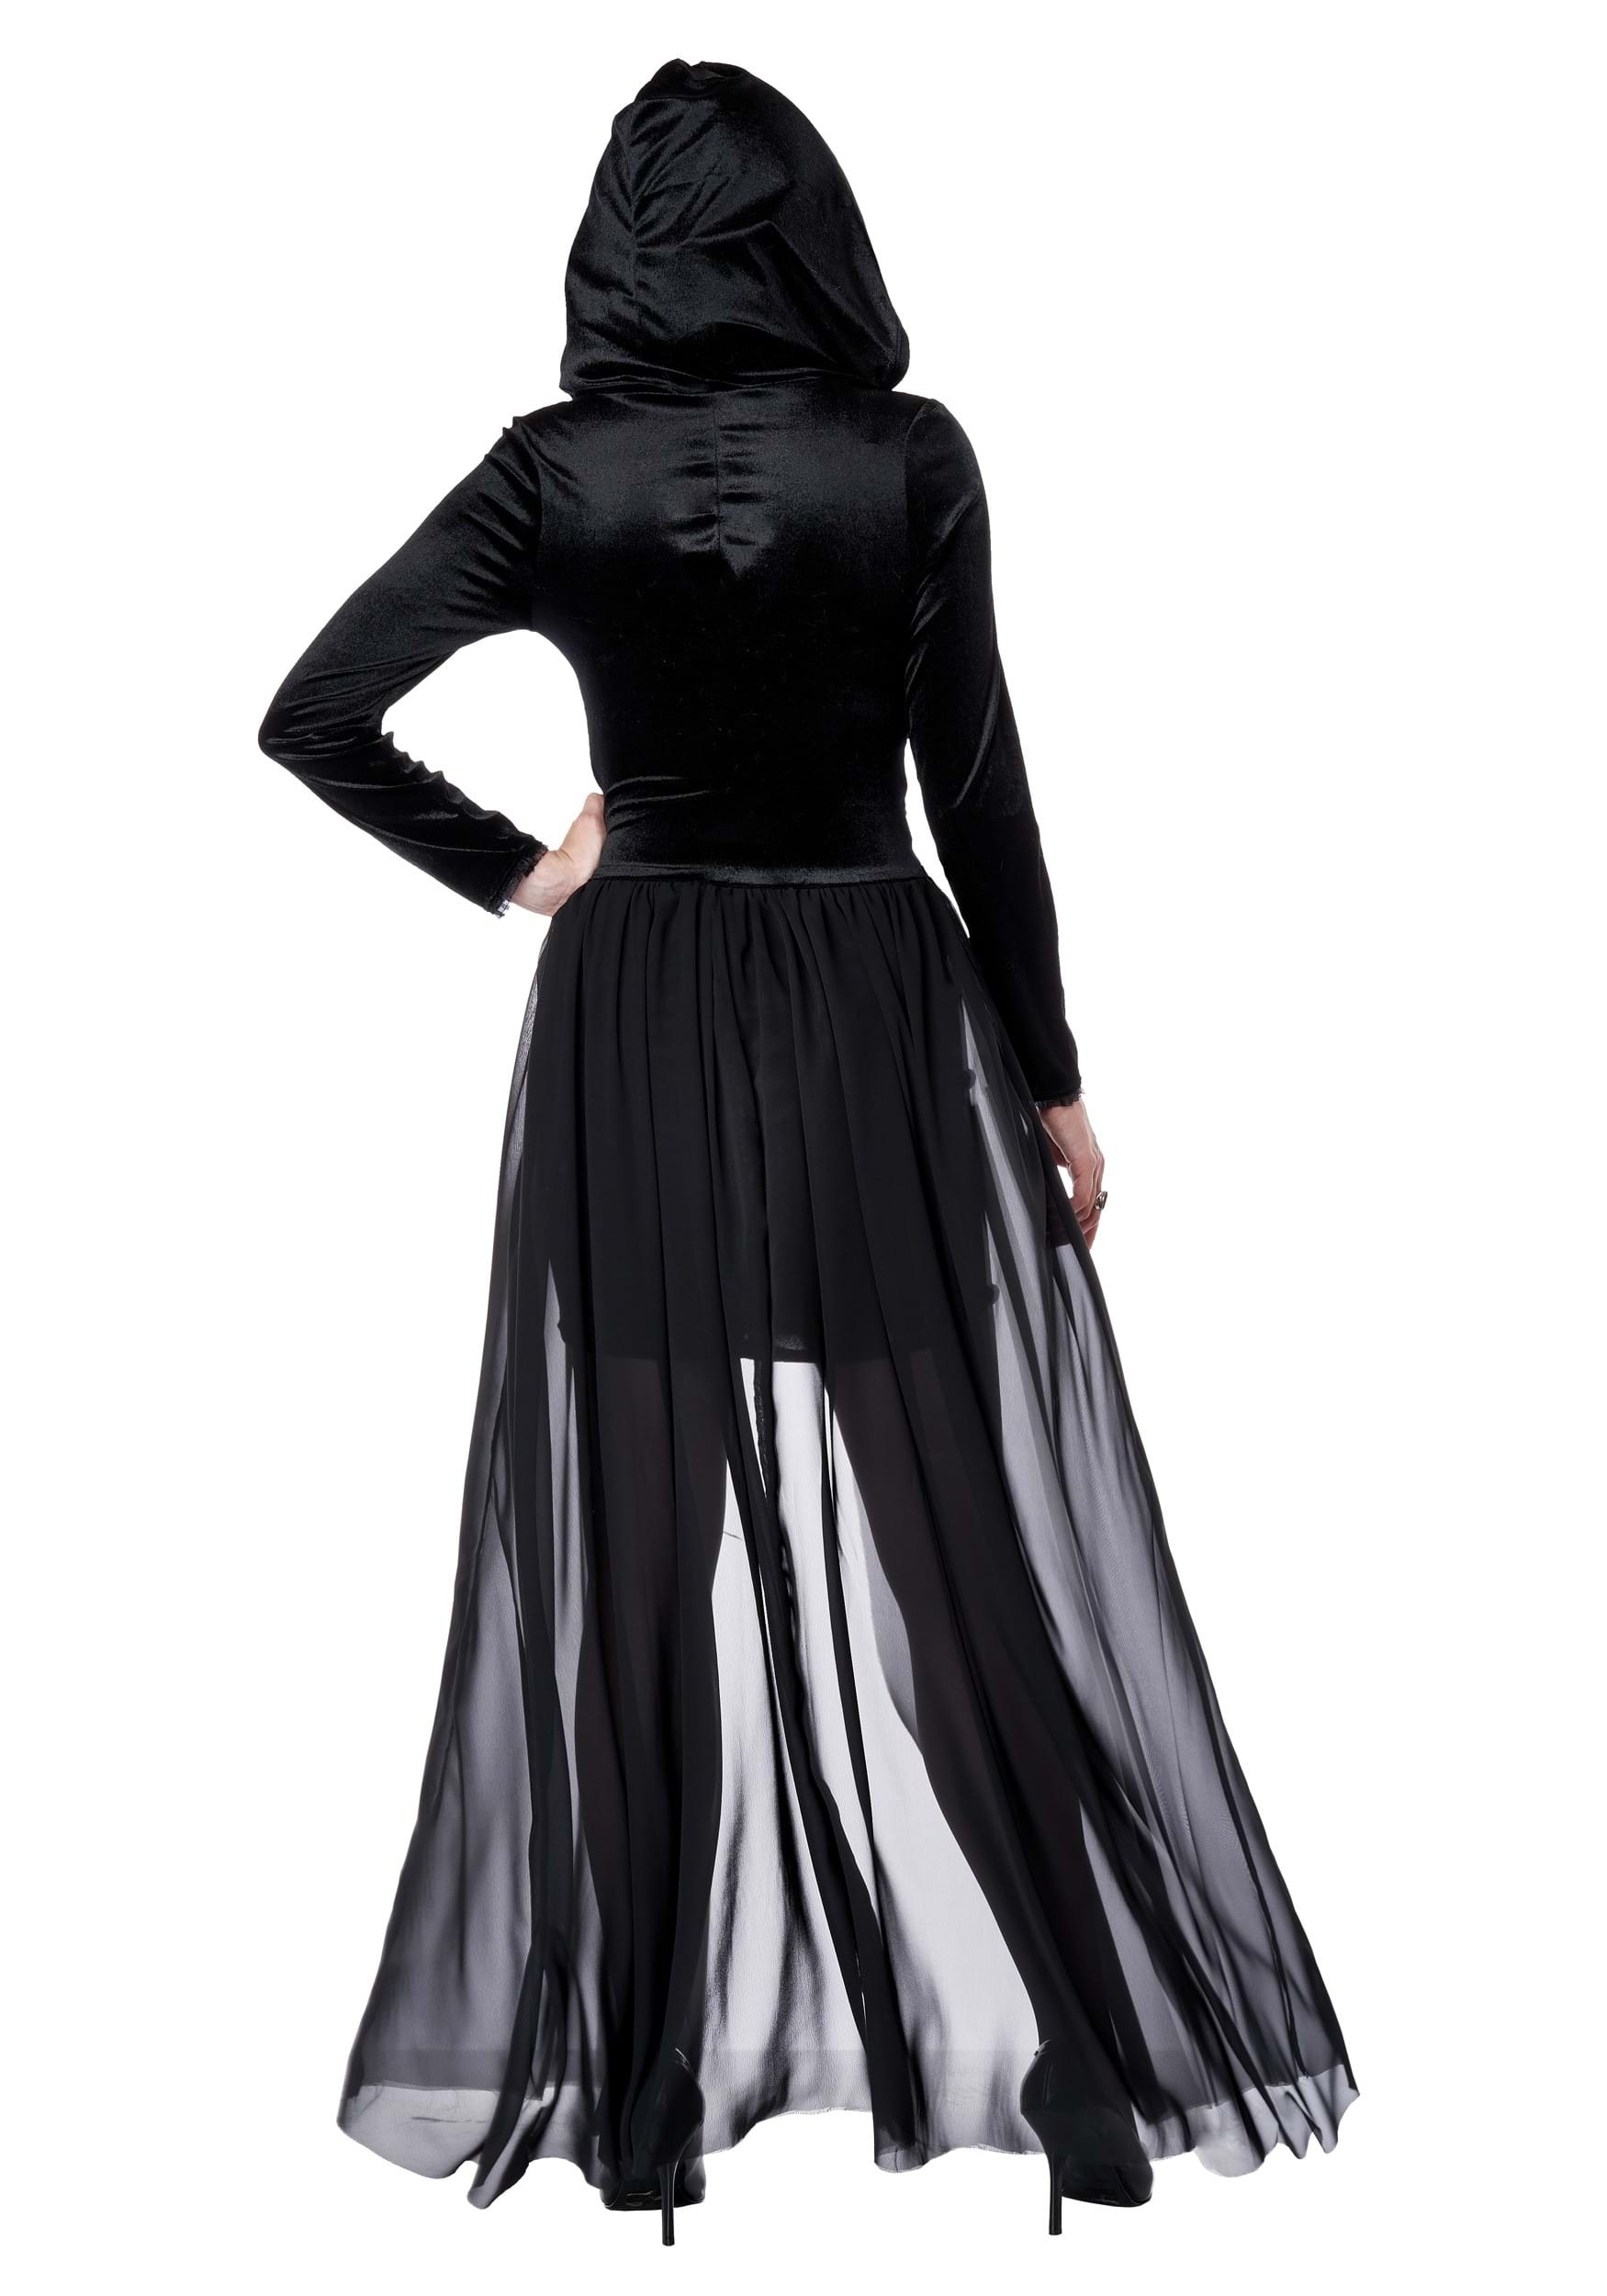 Women's Gothic Hooded Dress Fancy Dress Costume